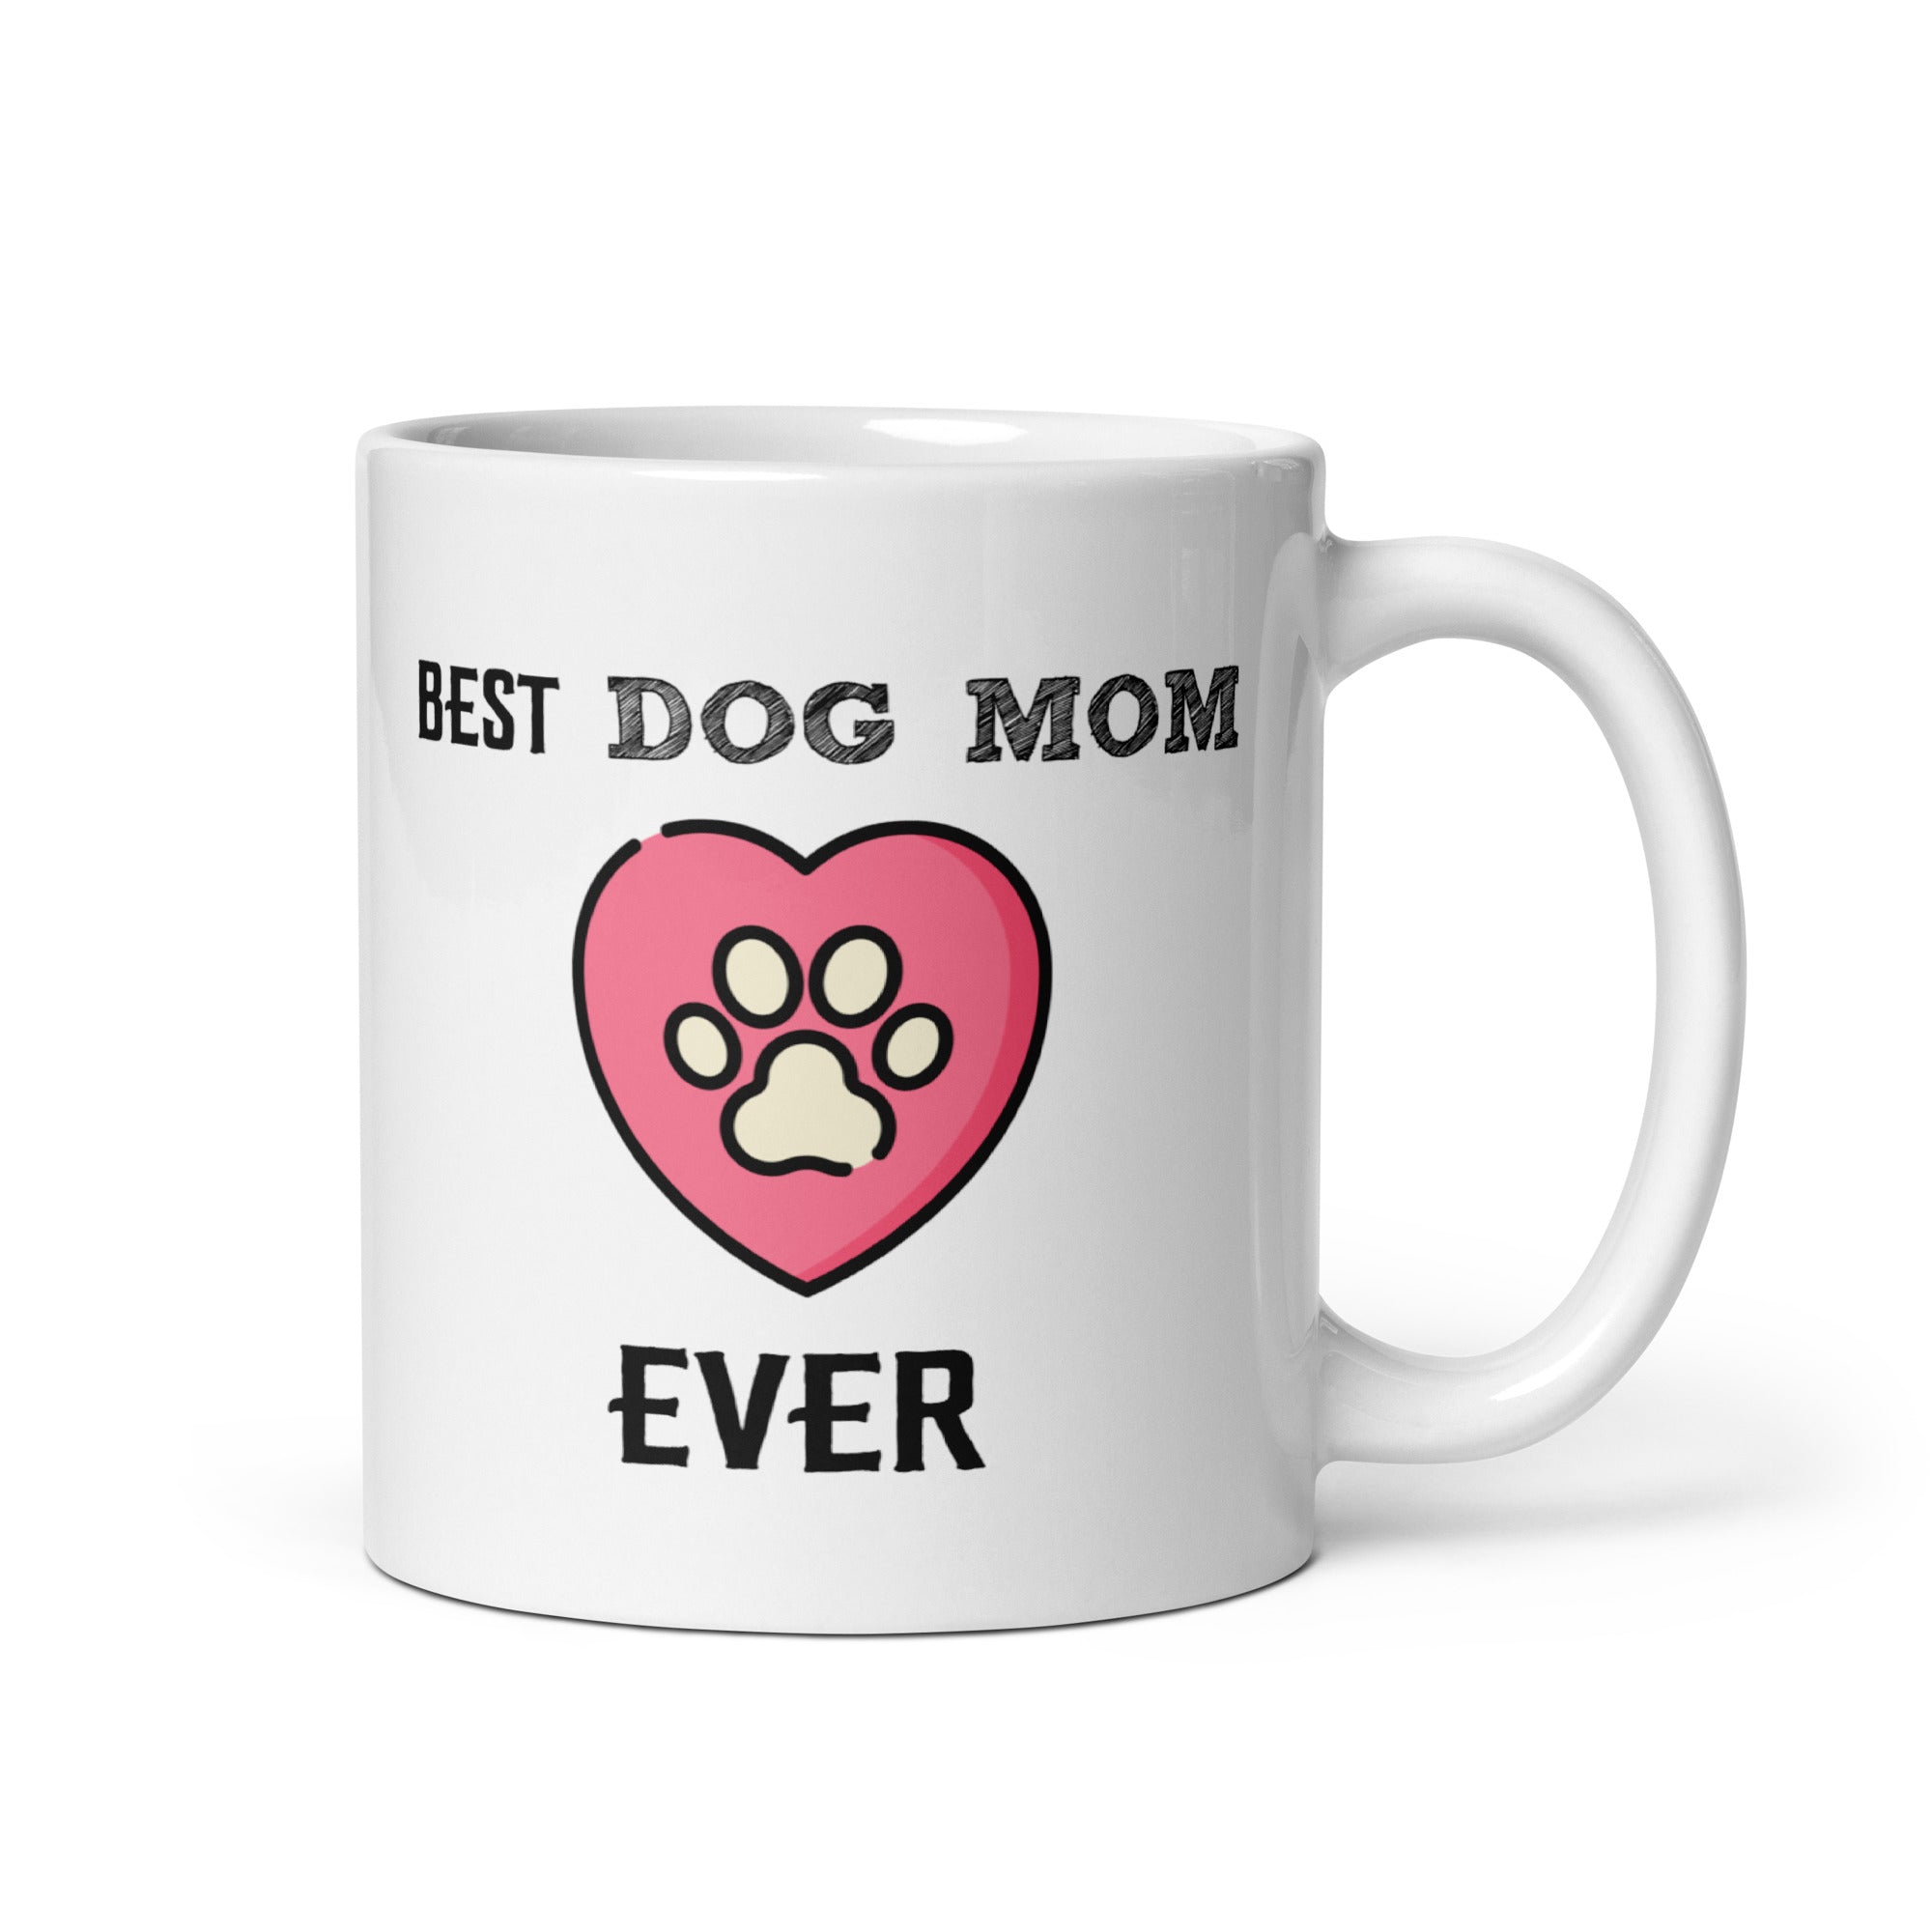 Best Dog Mom Ever Mug